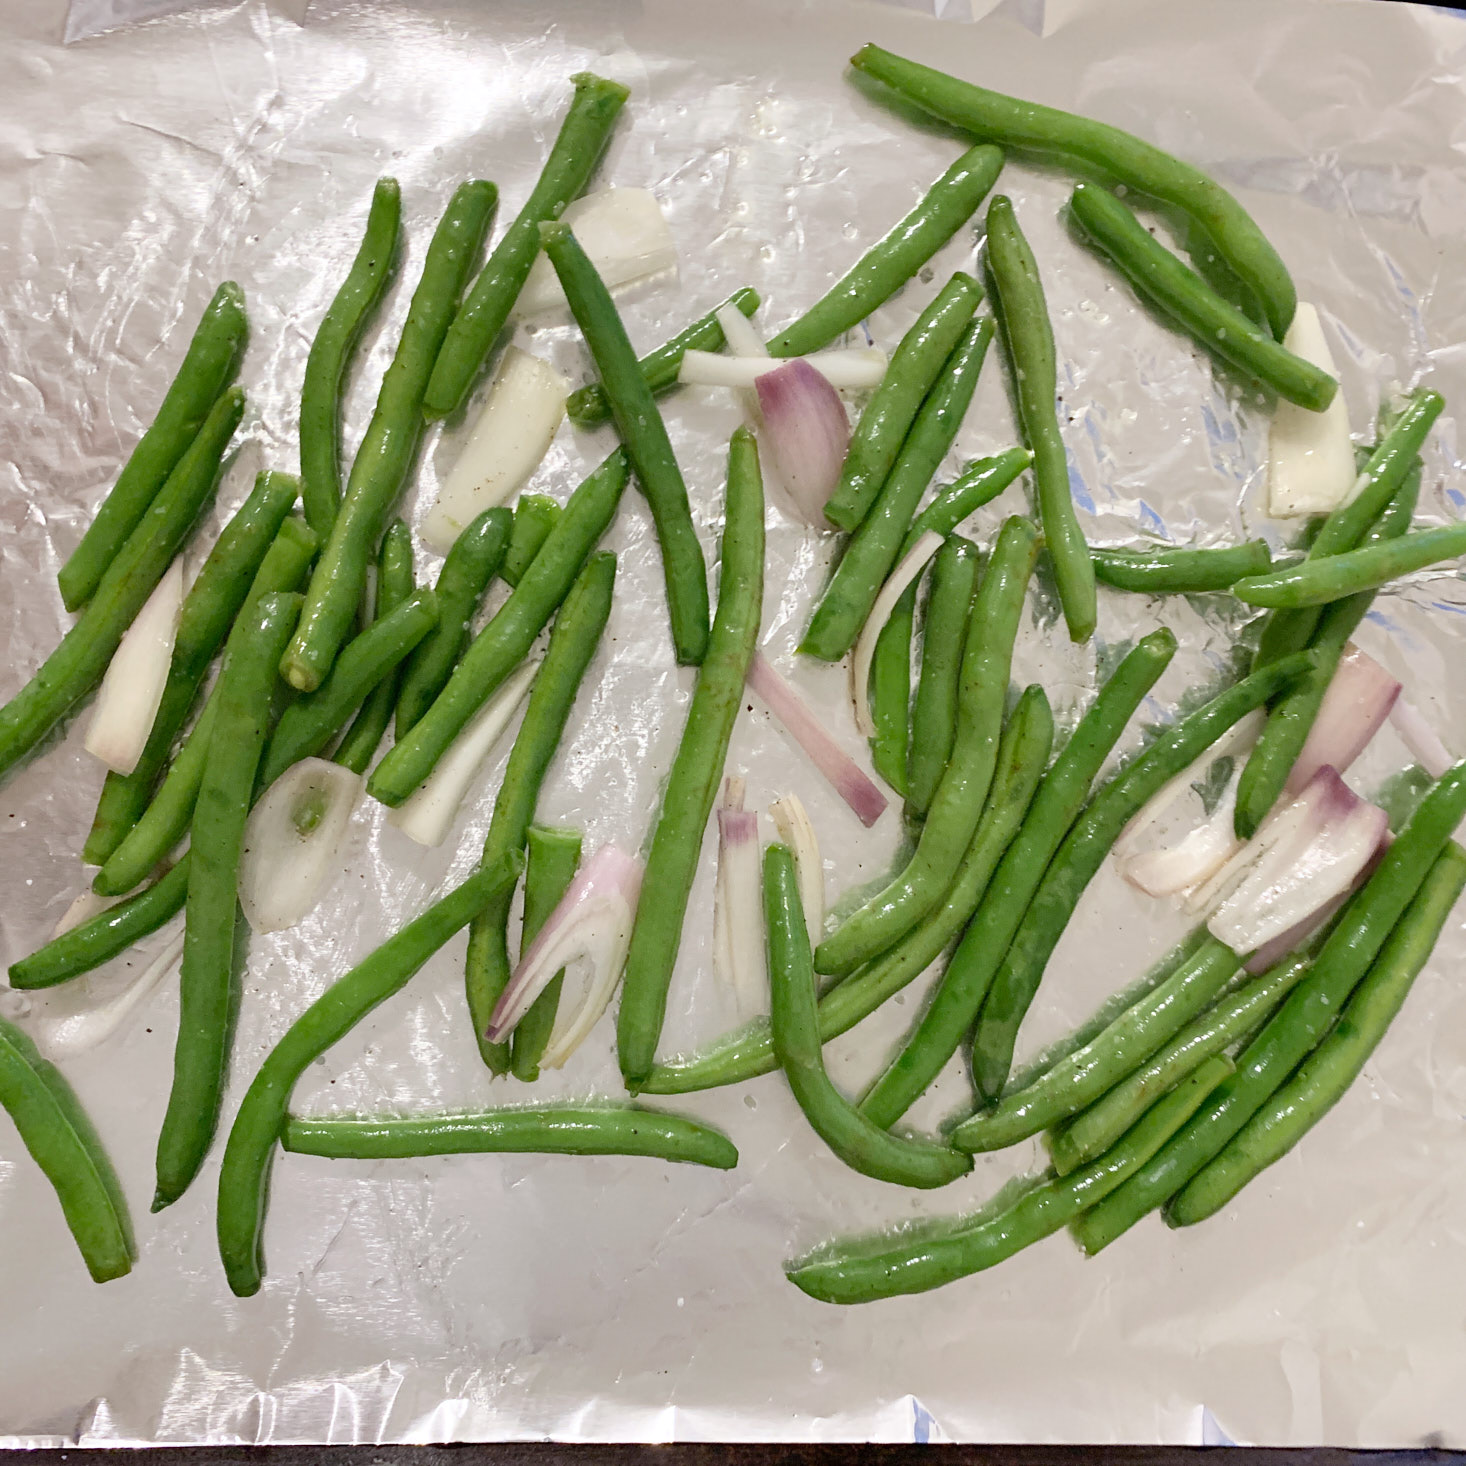 Green beans and shallots on baking sheet